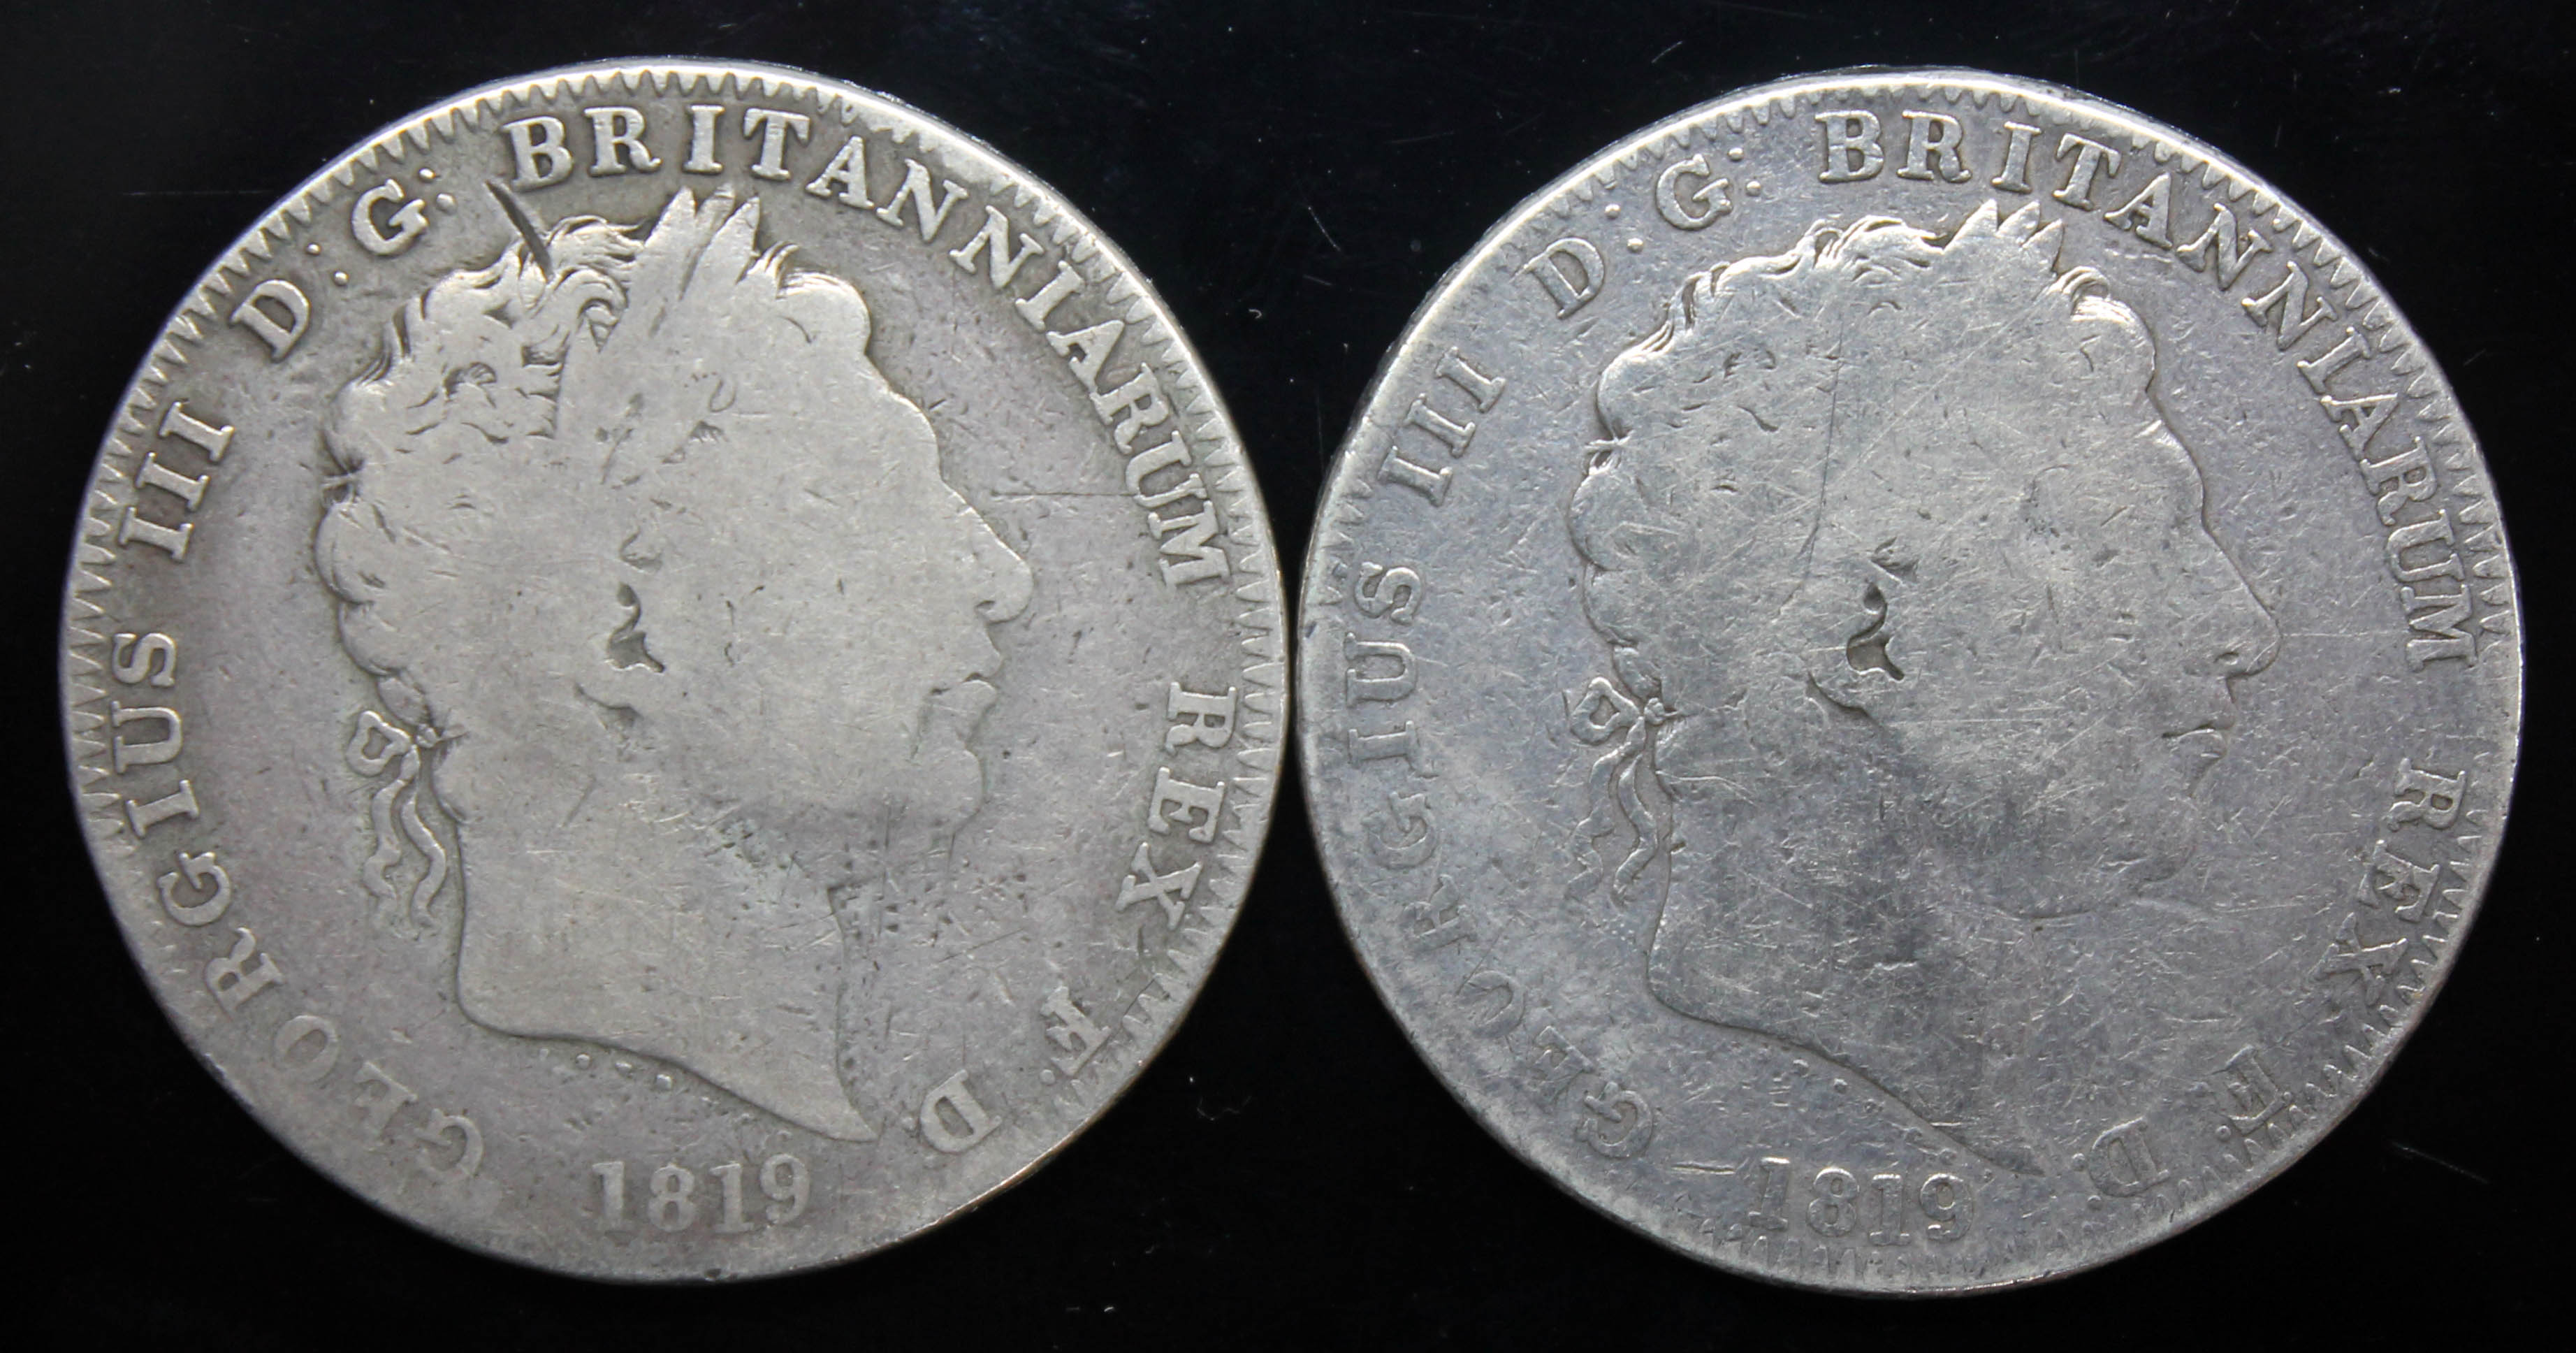 George III (1760-1820), two crowns, 1819.